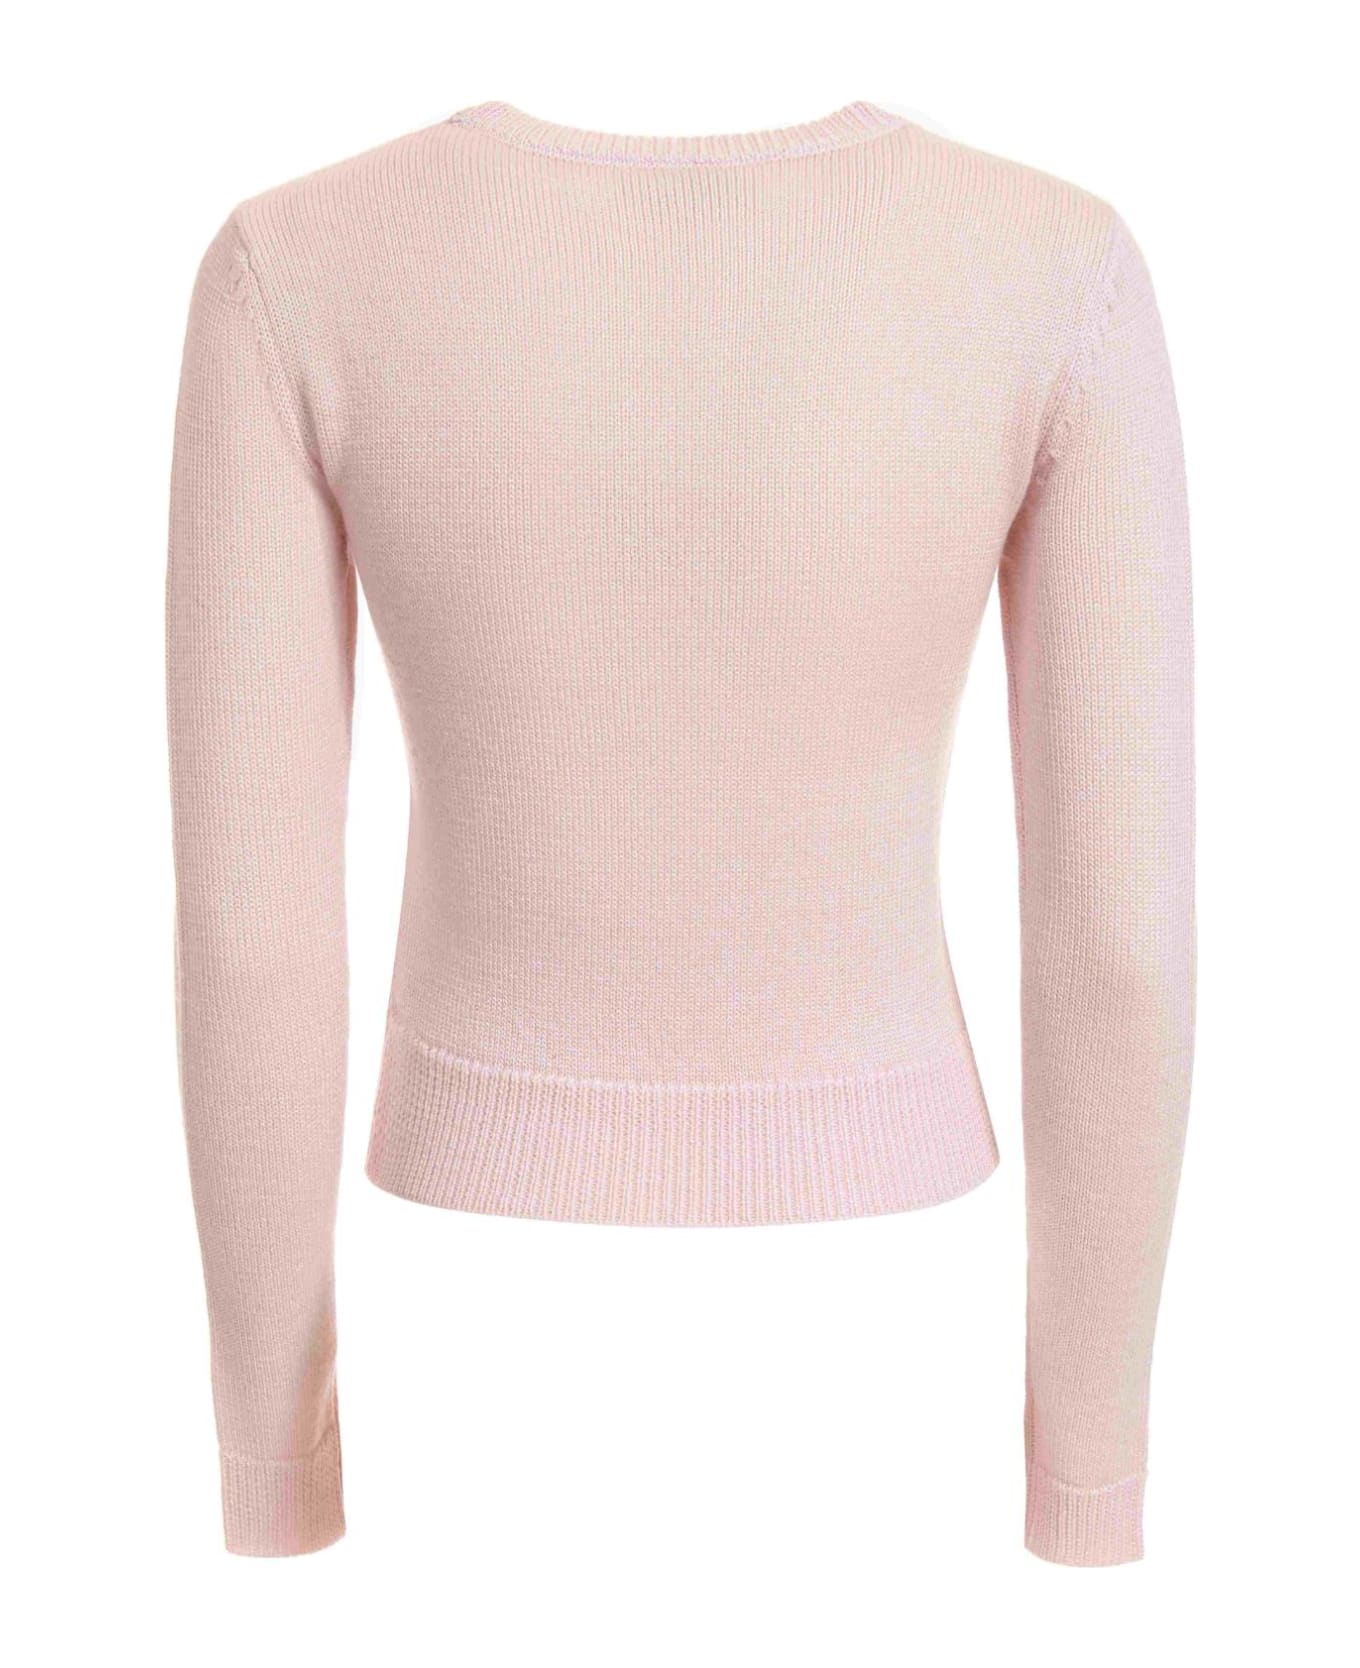 Chiara Ferragni Sweater